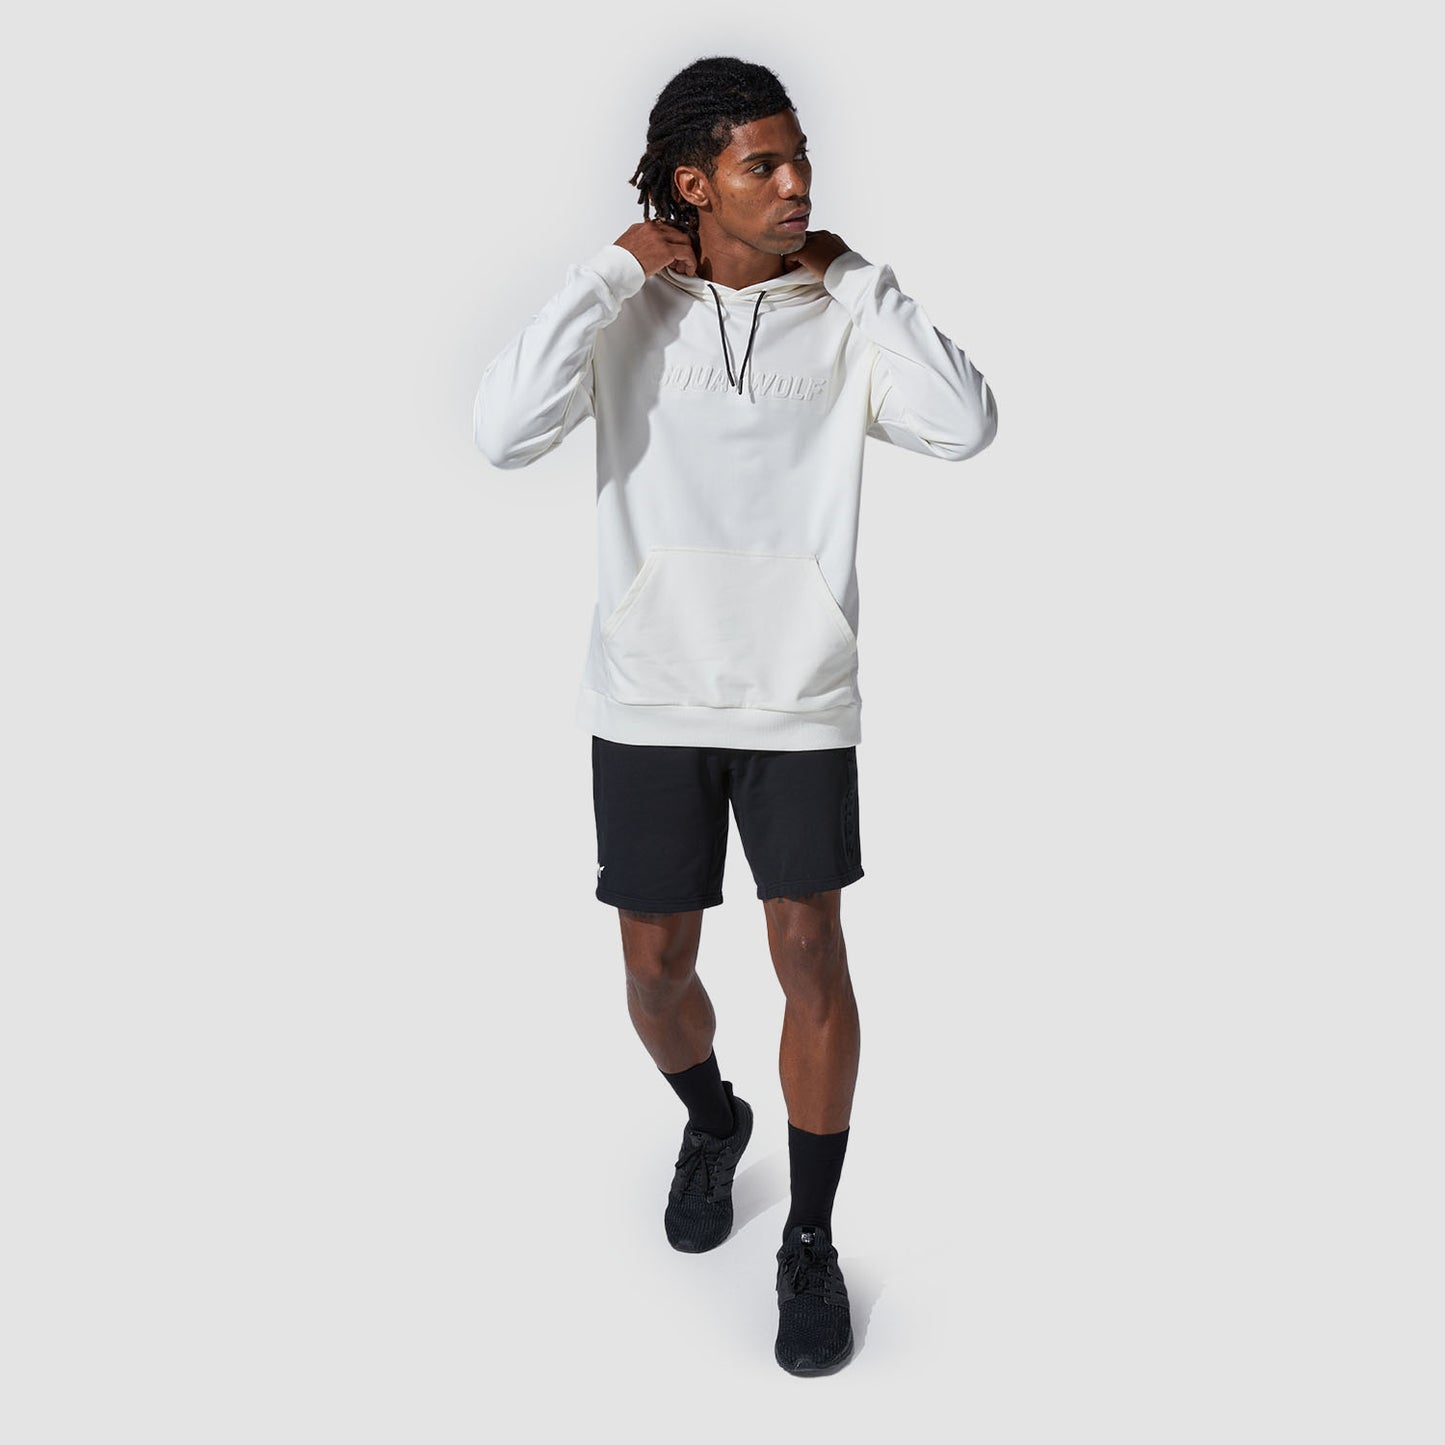 squatwolf-gym-wear-graphic-wordmark-hoodie-white-workout-hoodies-for-men